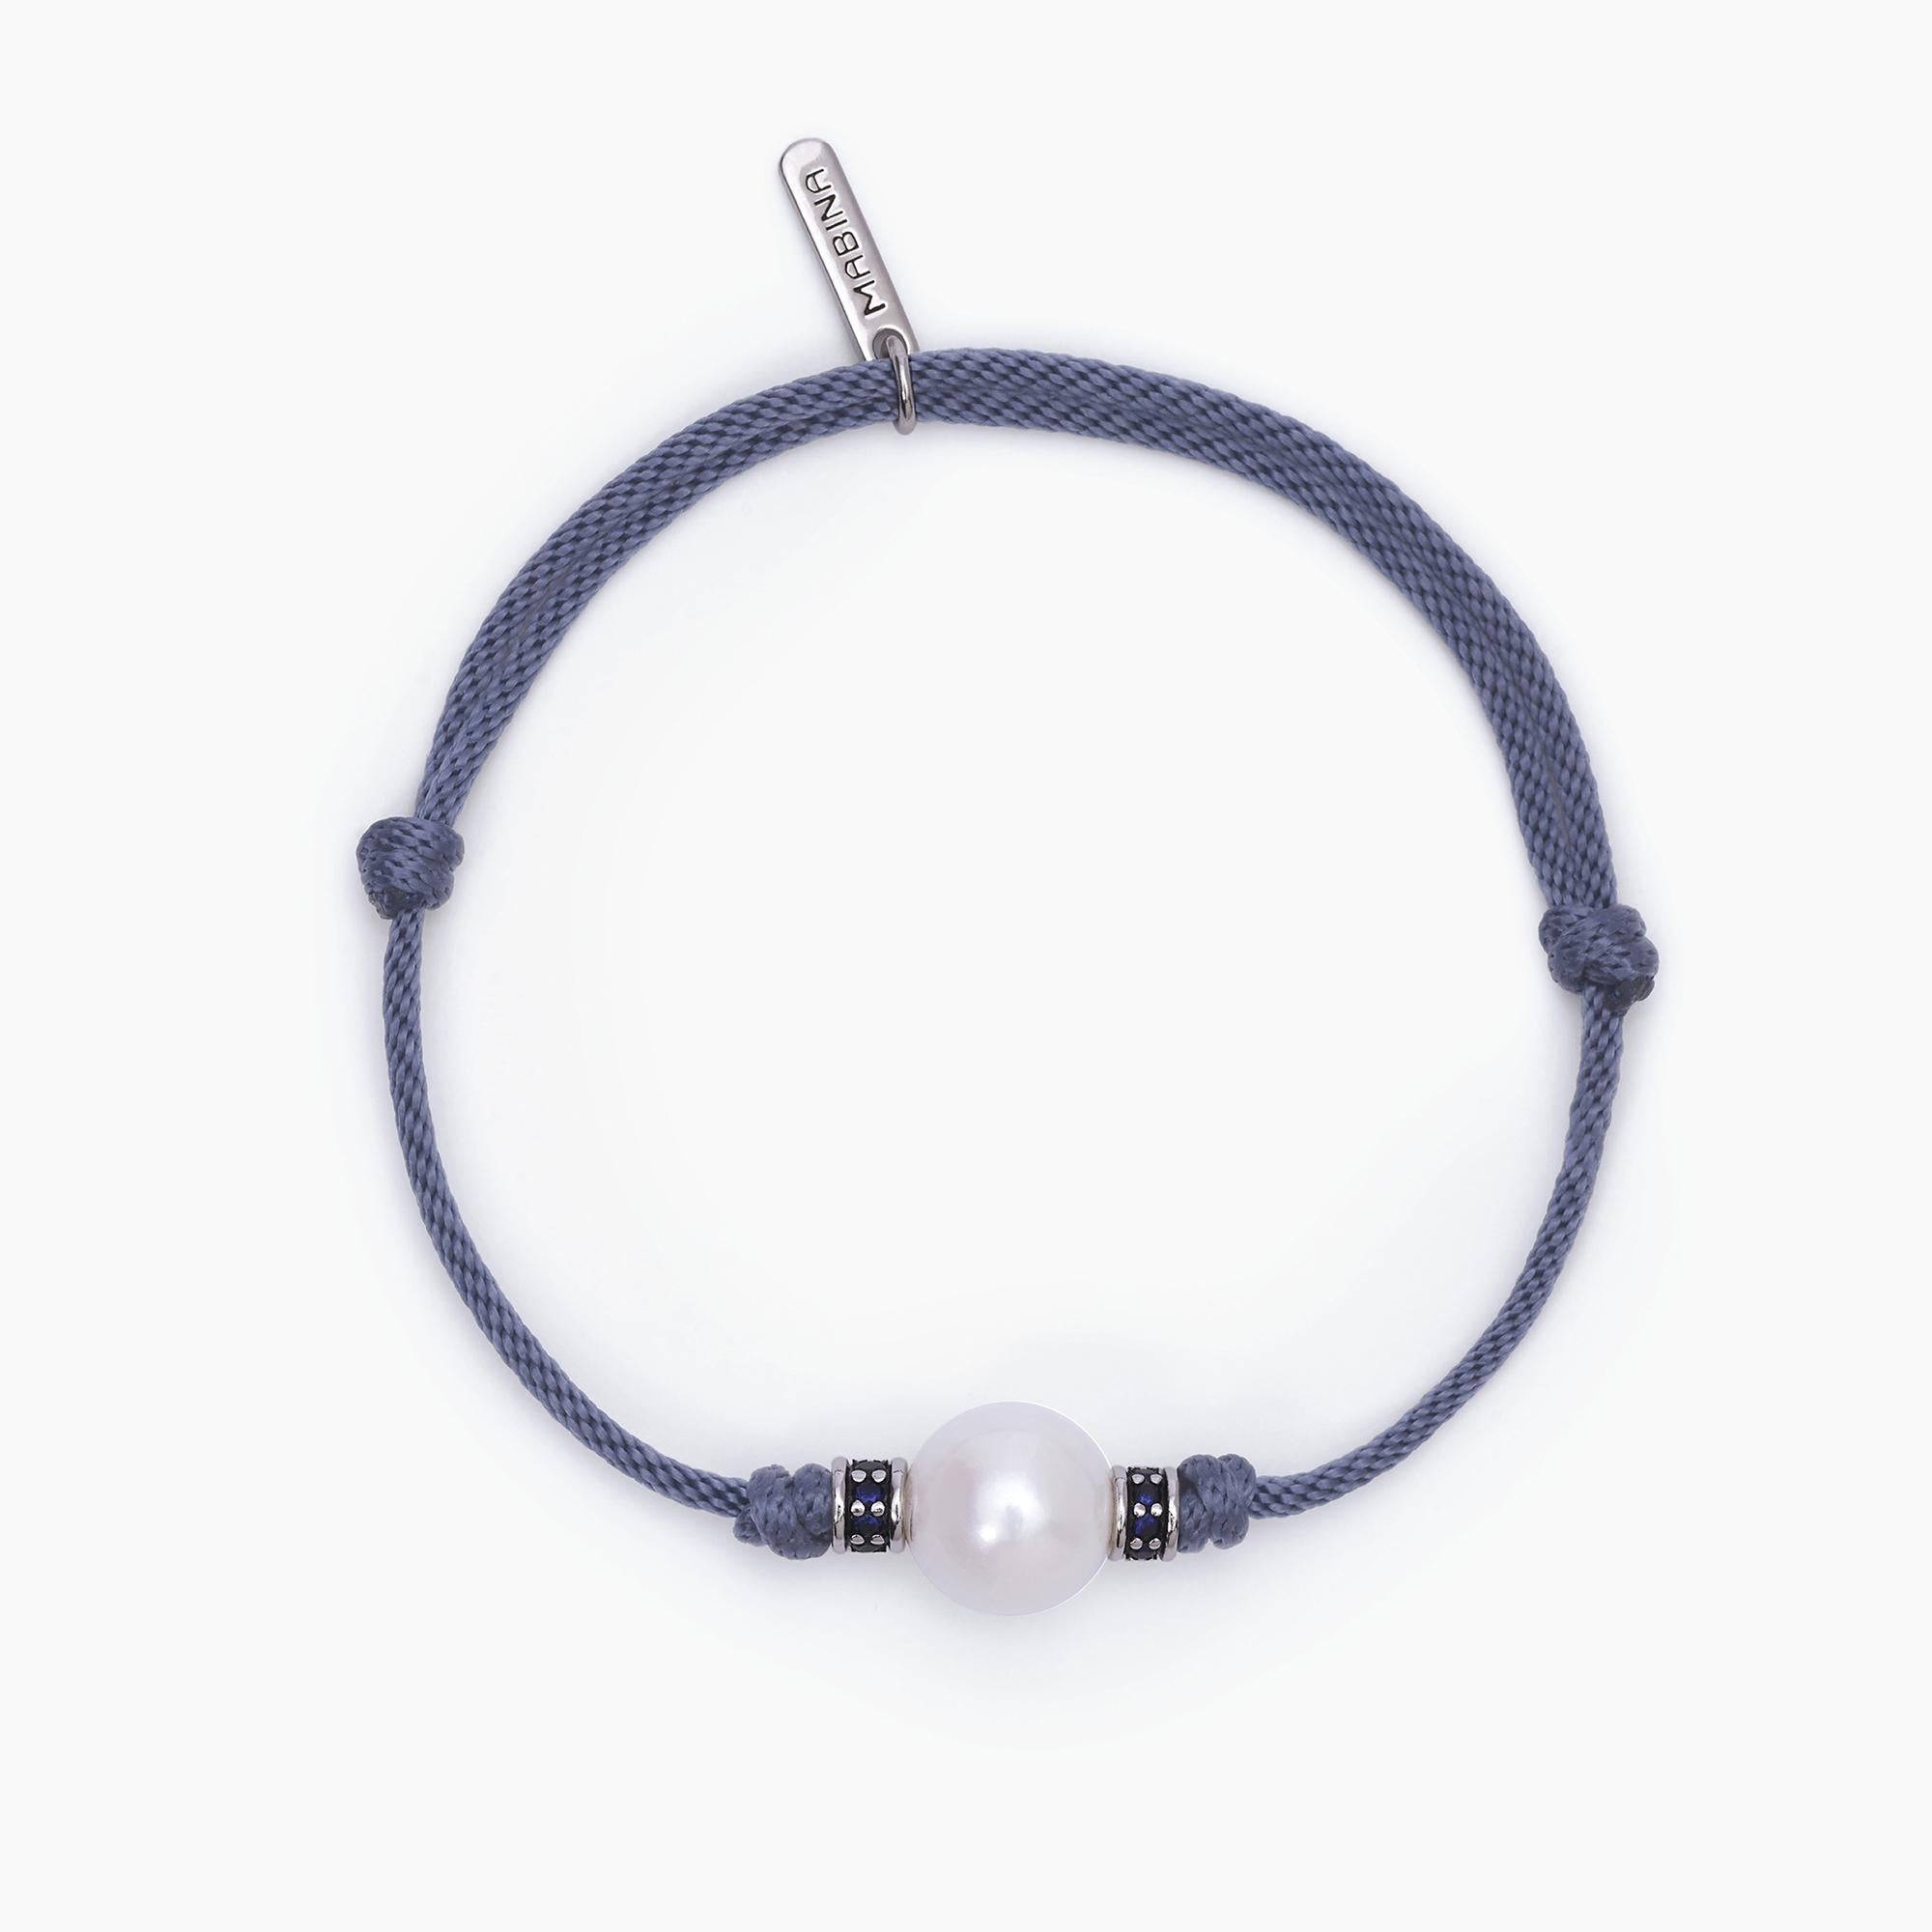 Mabina Homme - Bracelet avec cordon bleu et perle blanche TROPICAL - 533719